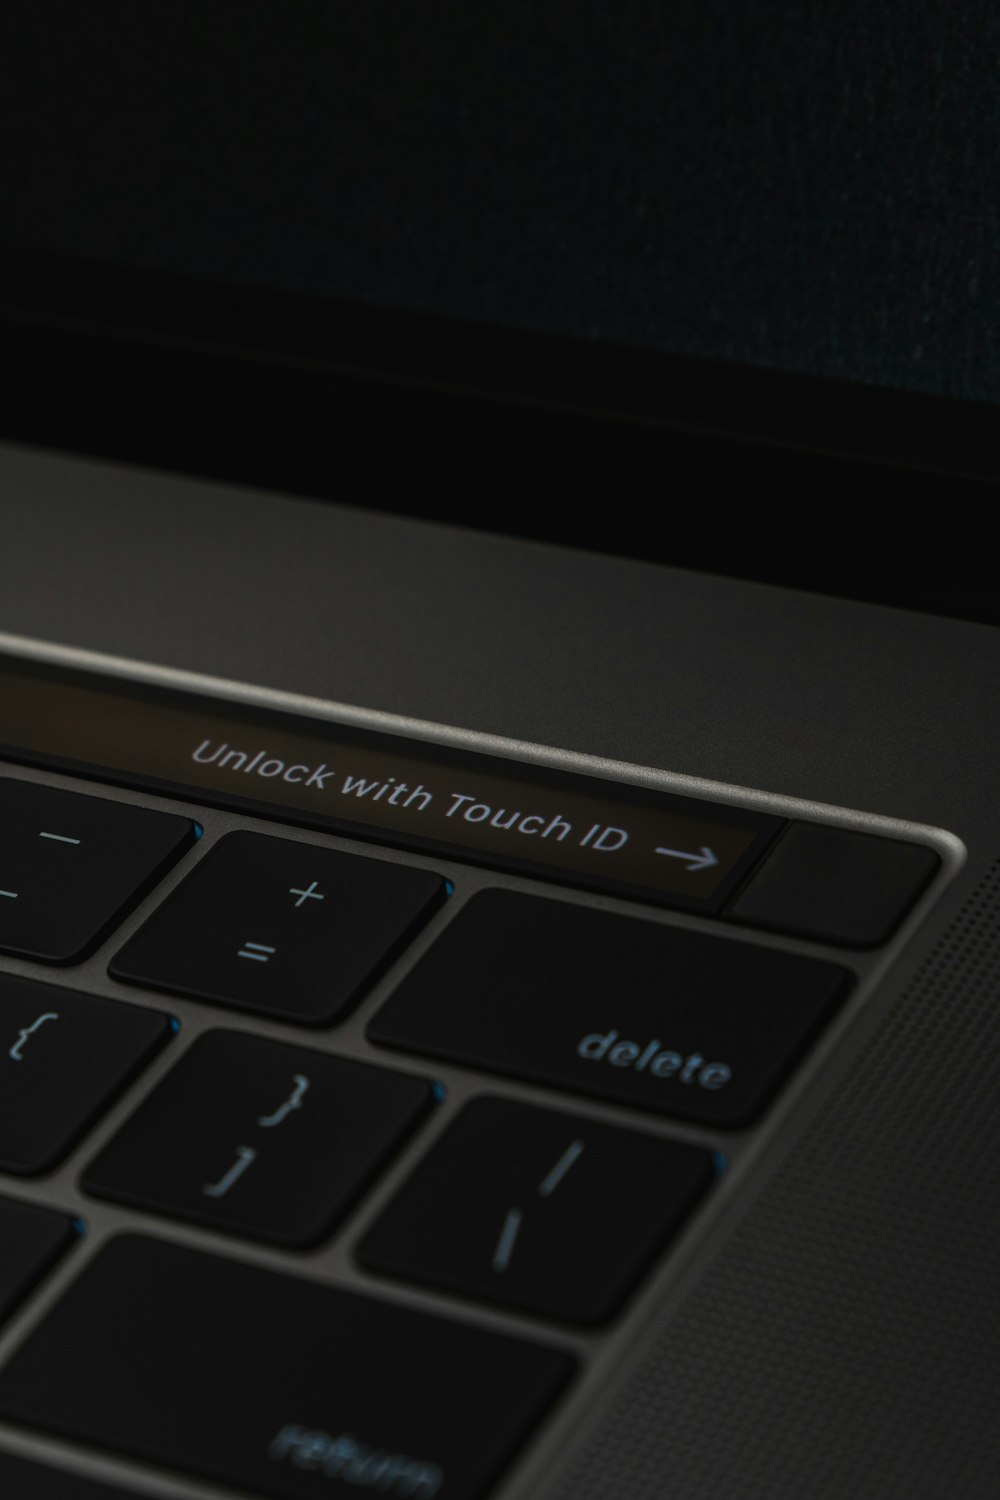 MacBook Air encendido que muestra la pantalla negra